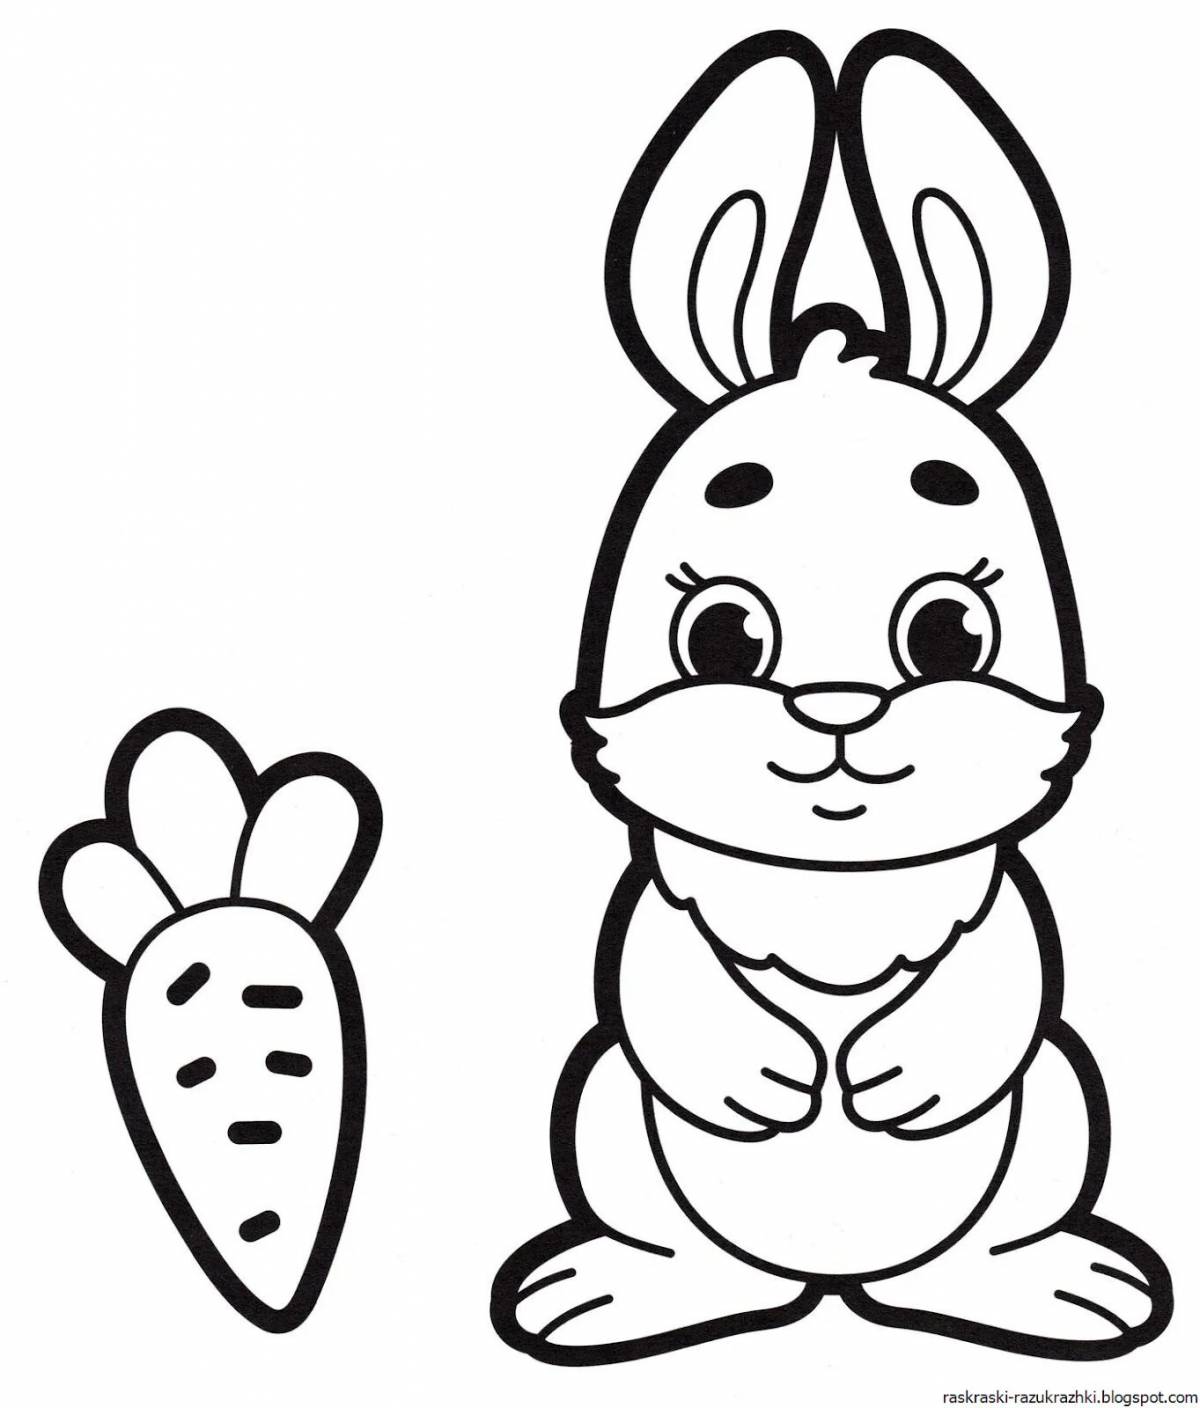 Carrot bunny for kids #7